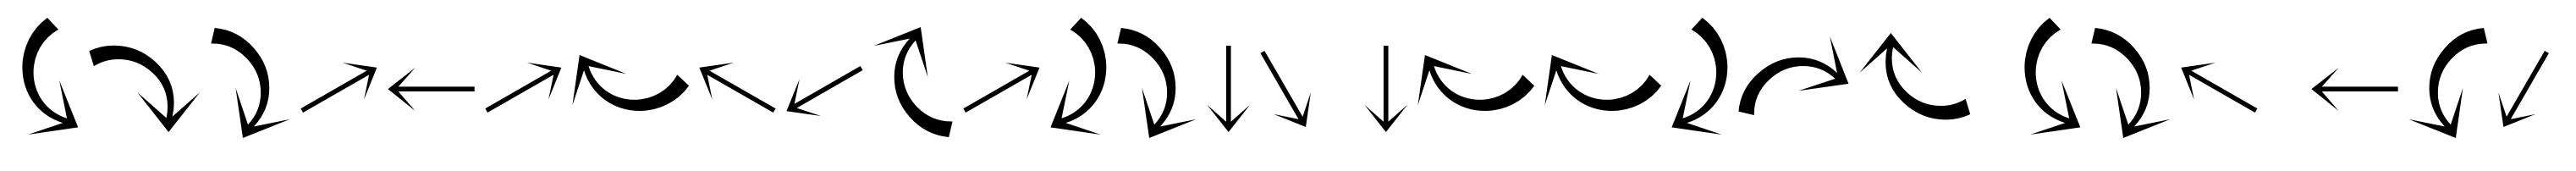 Omnidirectional Arrows One JNL